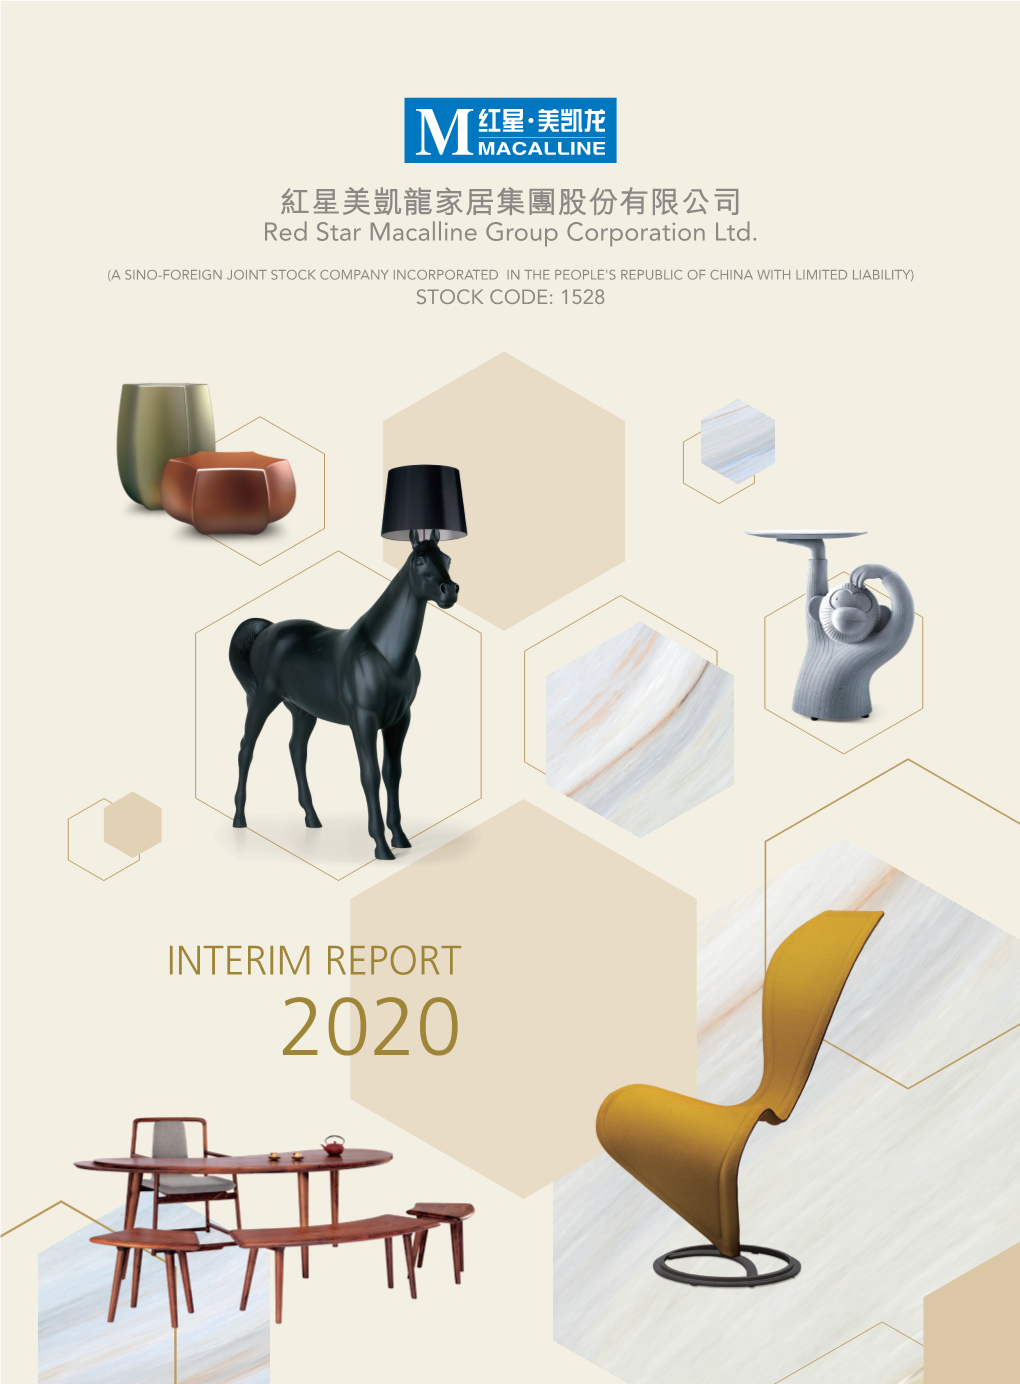 INTERIM REPORT 2020 Contents